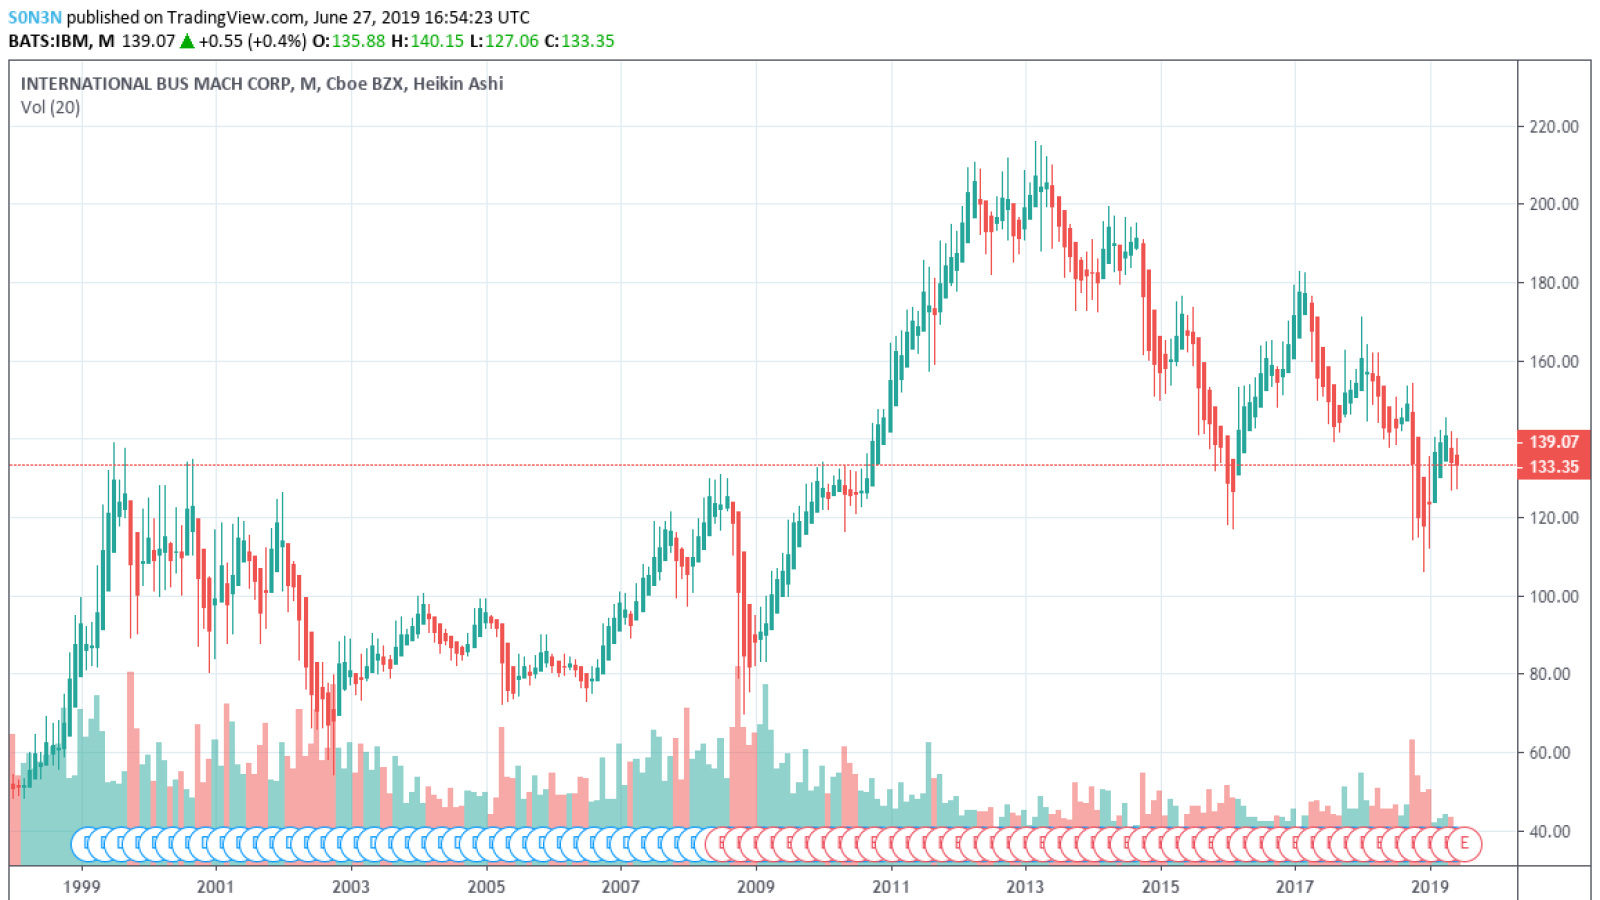 IBM stocks price charts